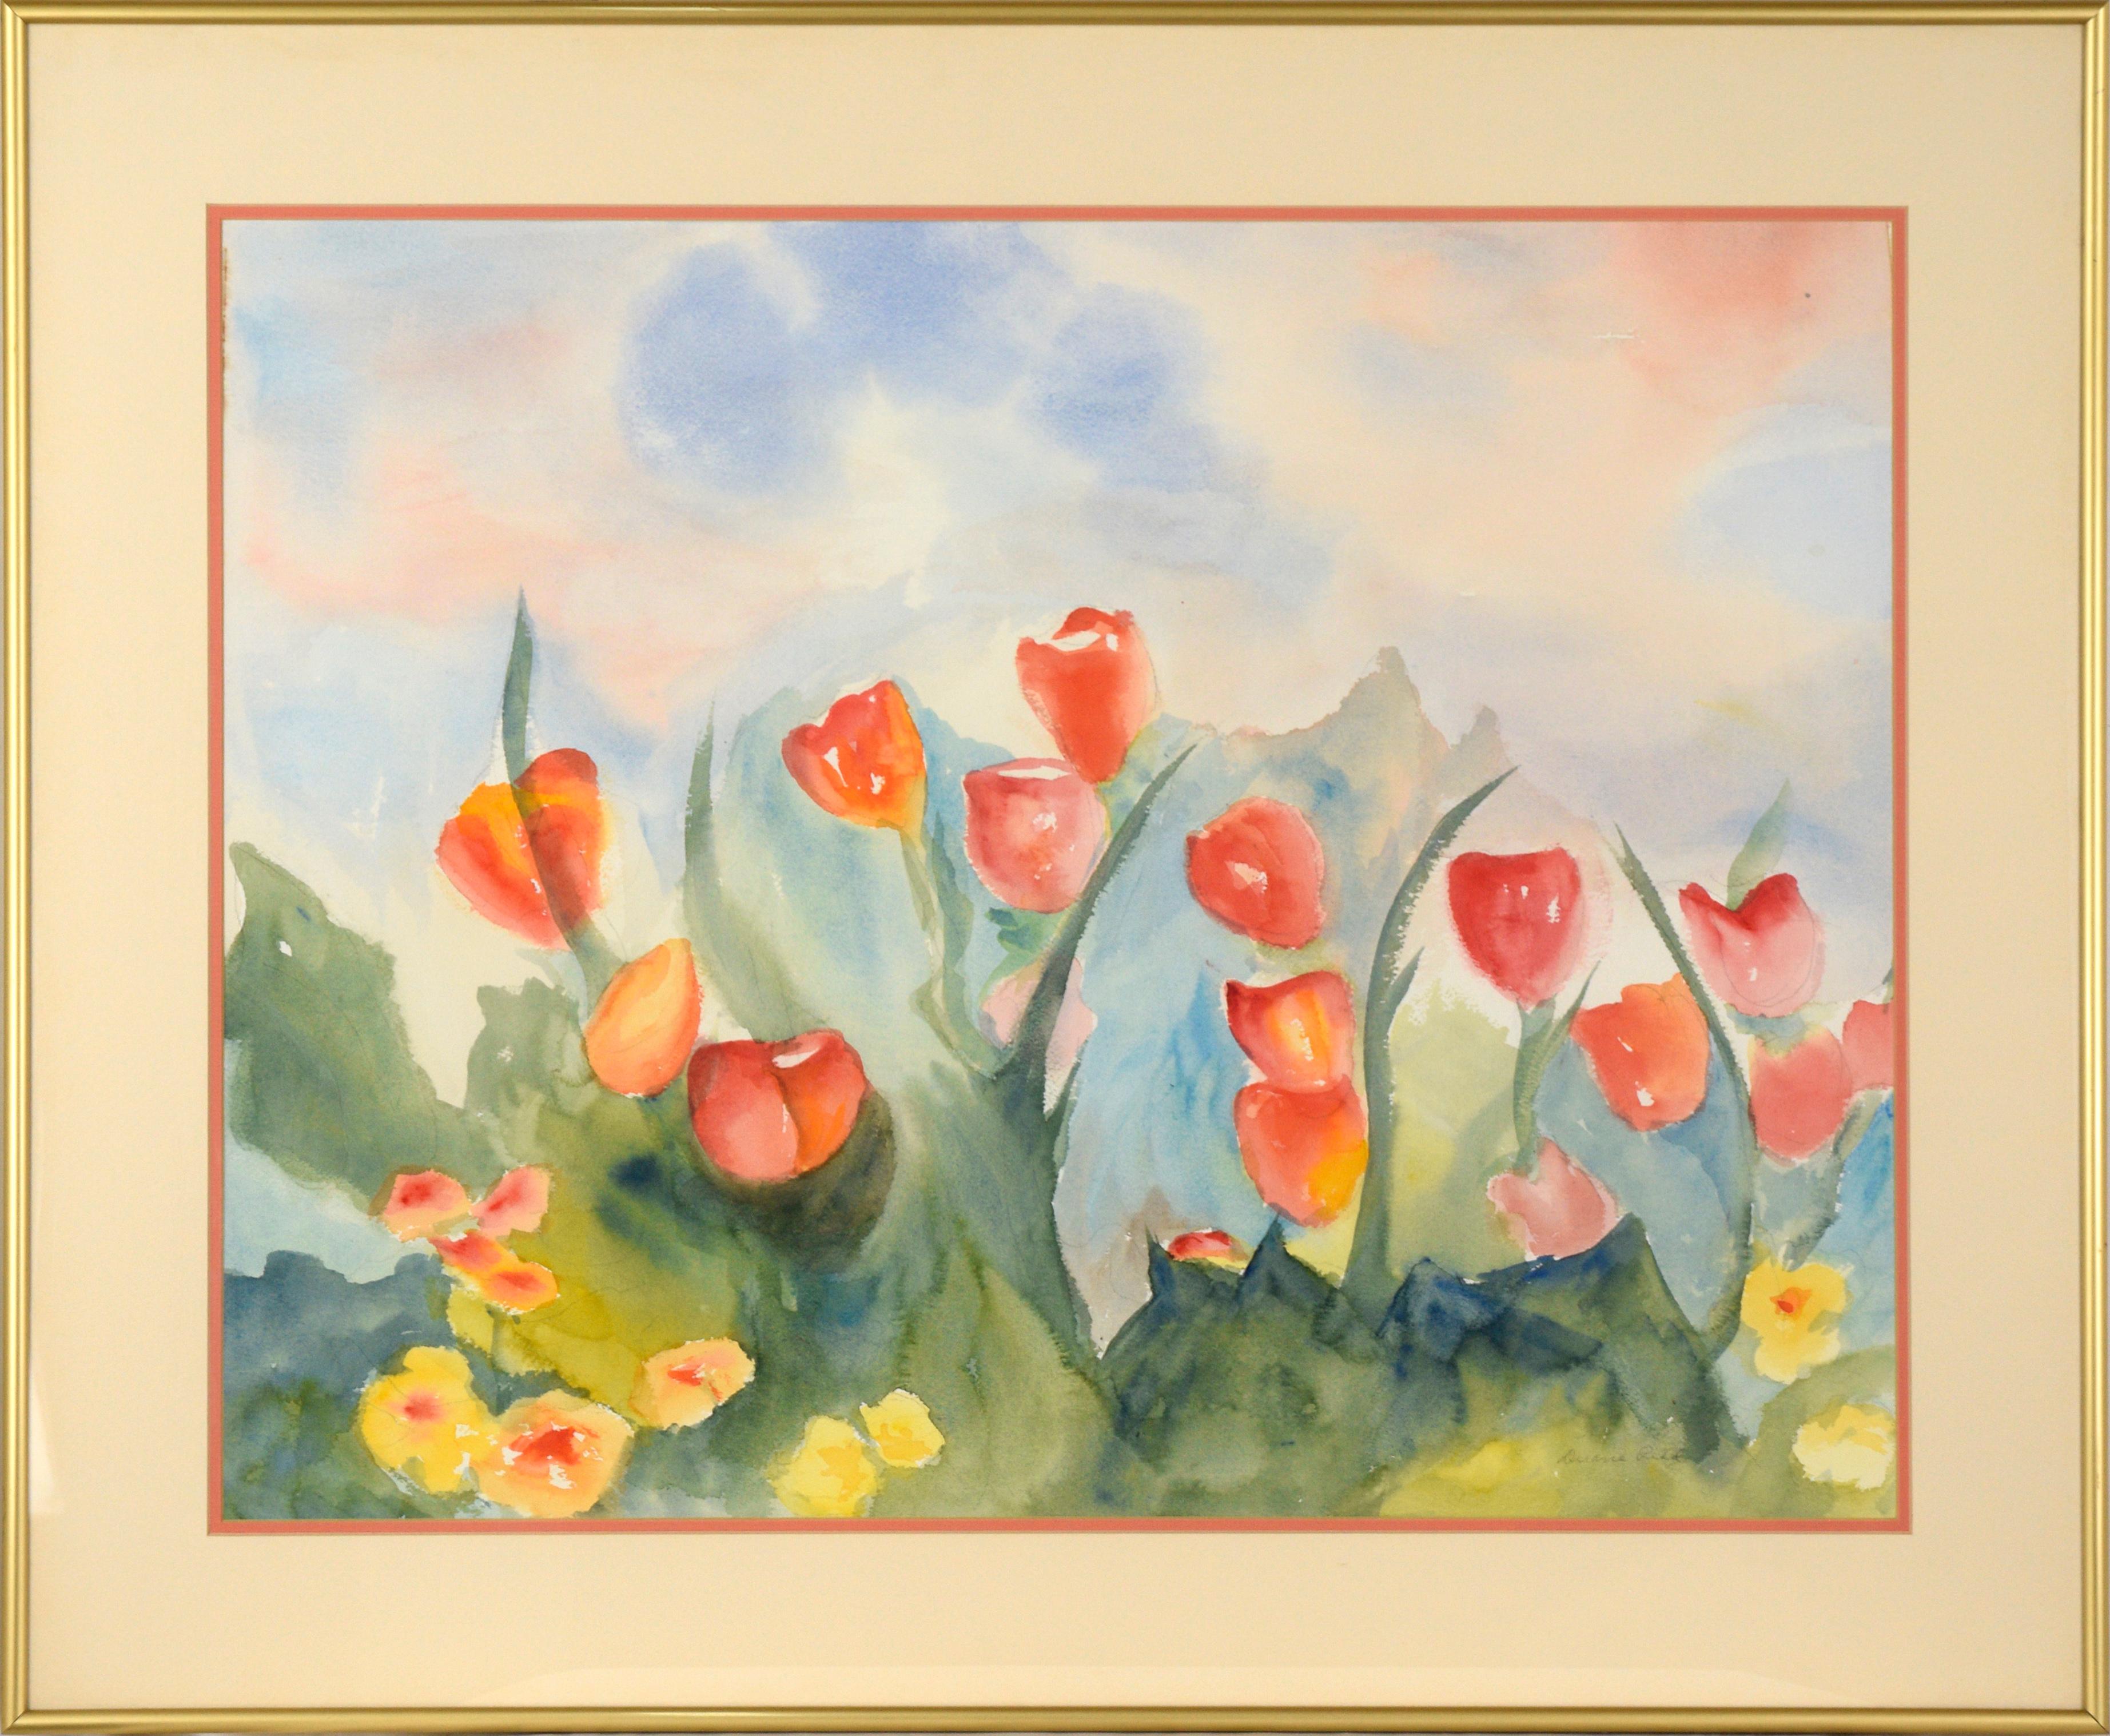 Duane Reid Landscape Art - Red Tulips and California Poppies, Landscape